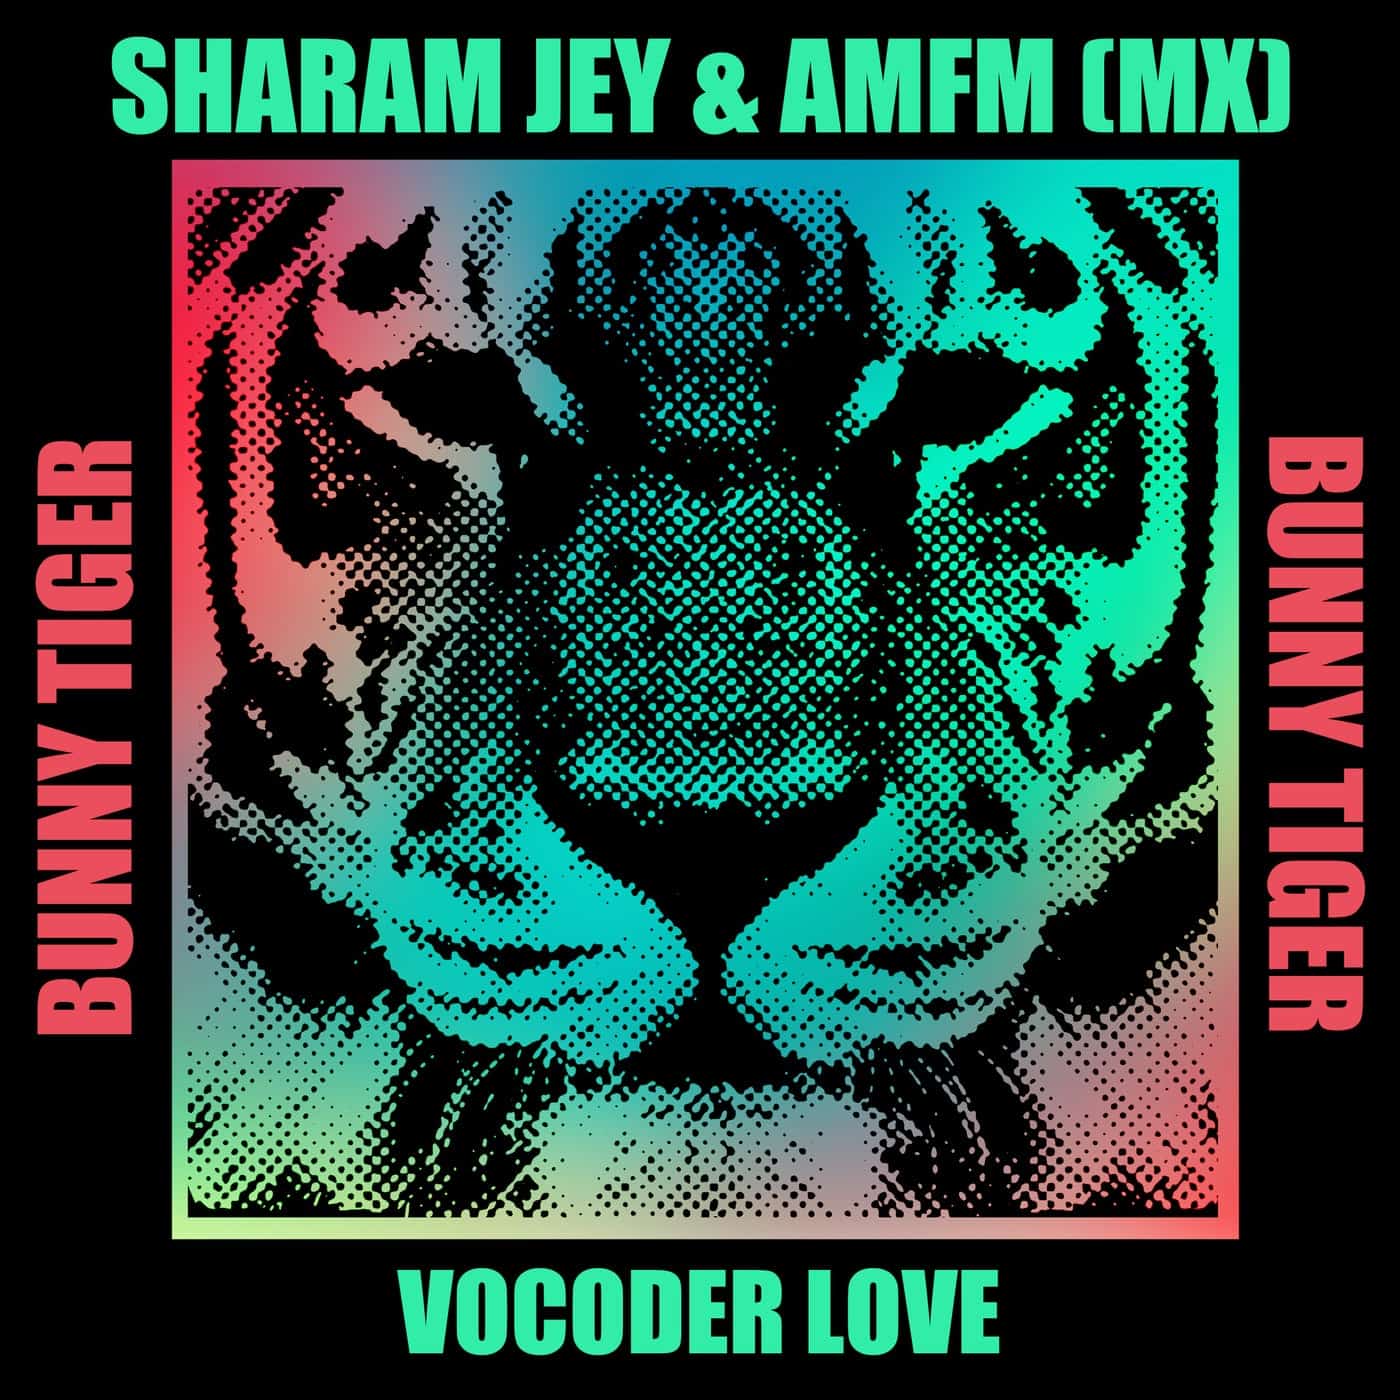 Download Sharam Jey, AMFM (MX) - Vocoder Love on Electrobuzz